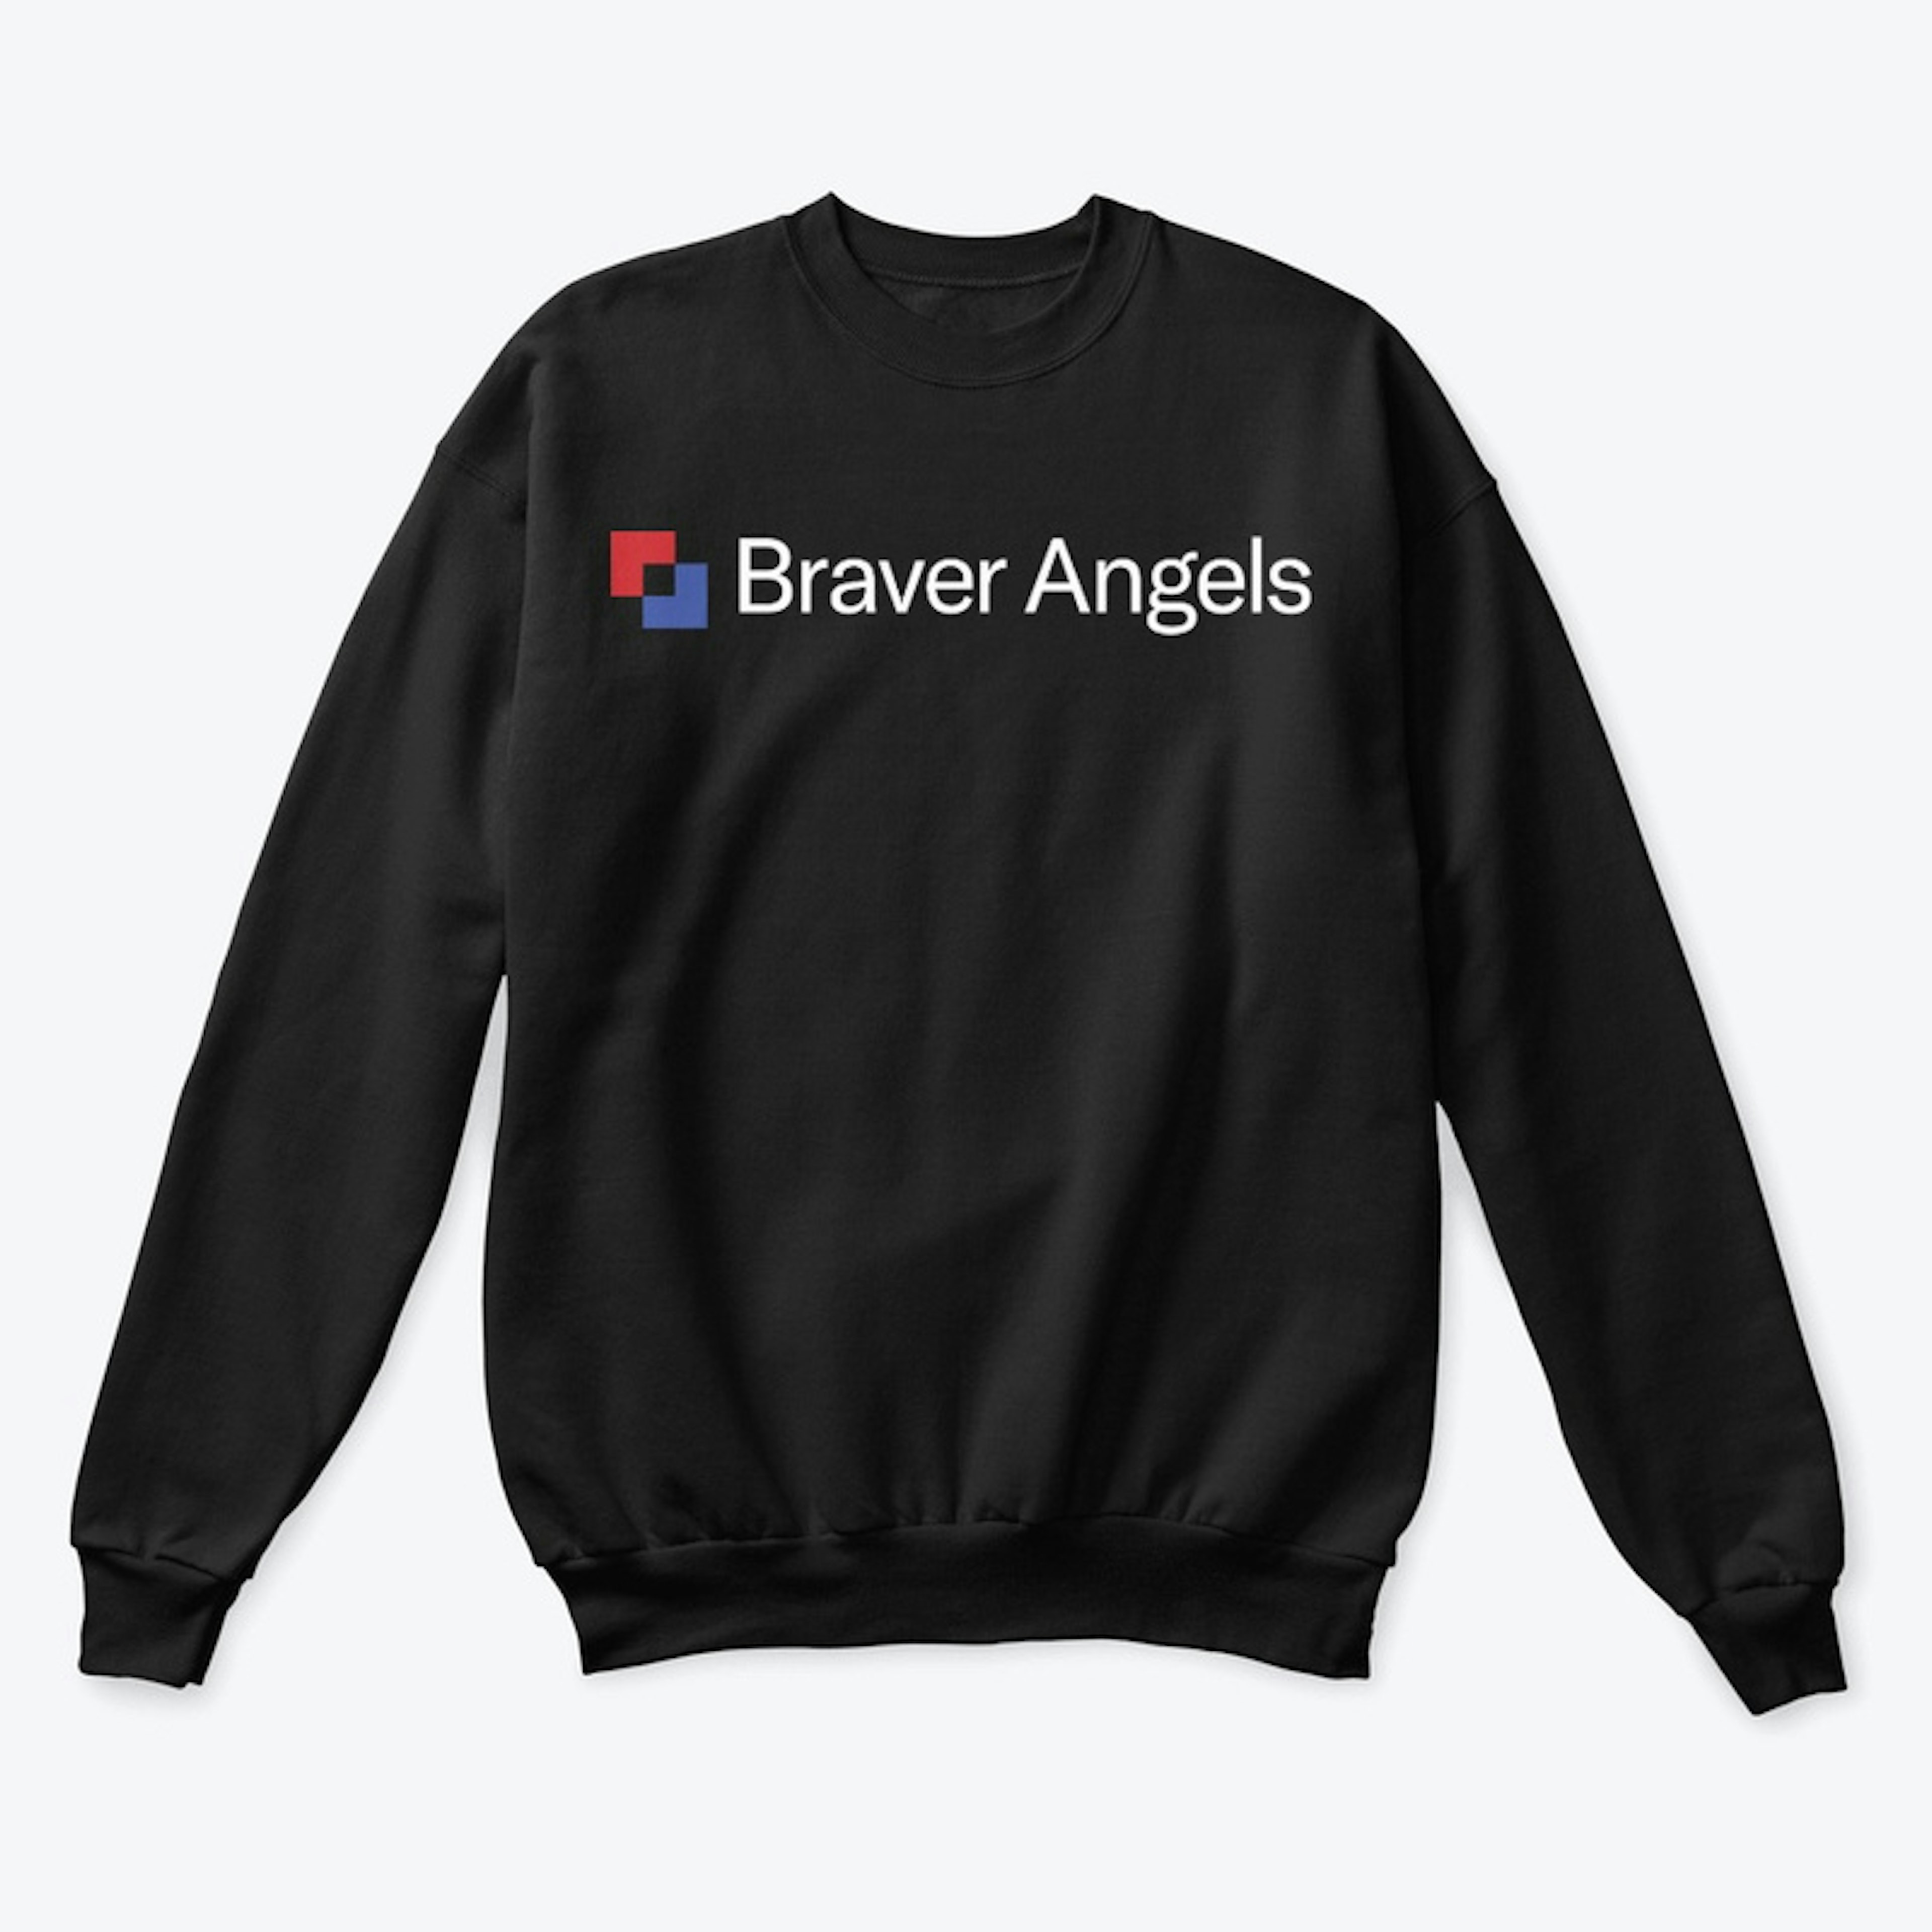 Braver Angels Crew Neck Sweatshirt Black